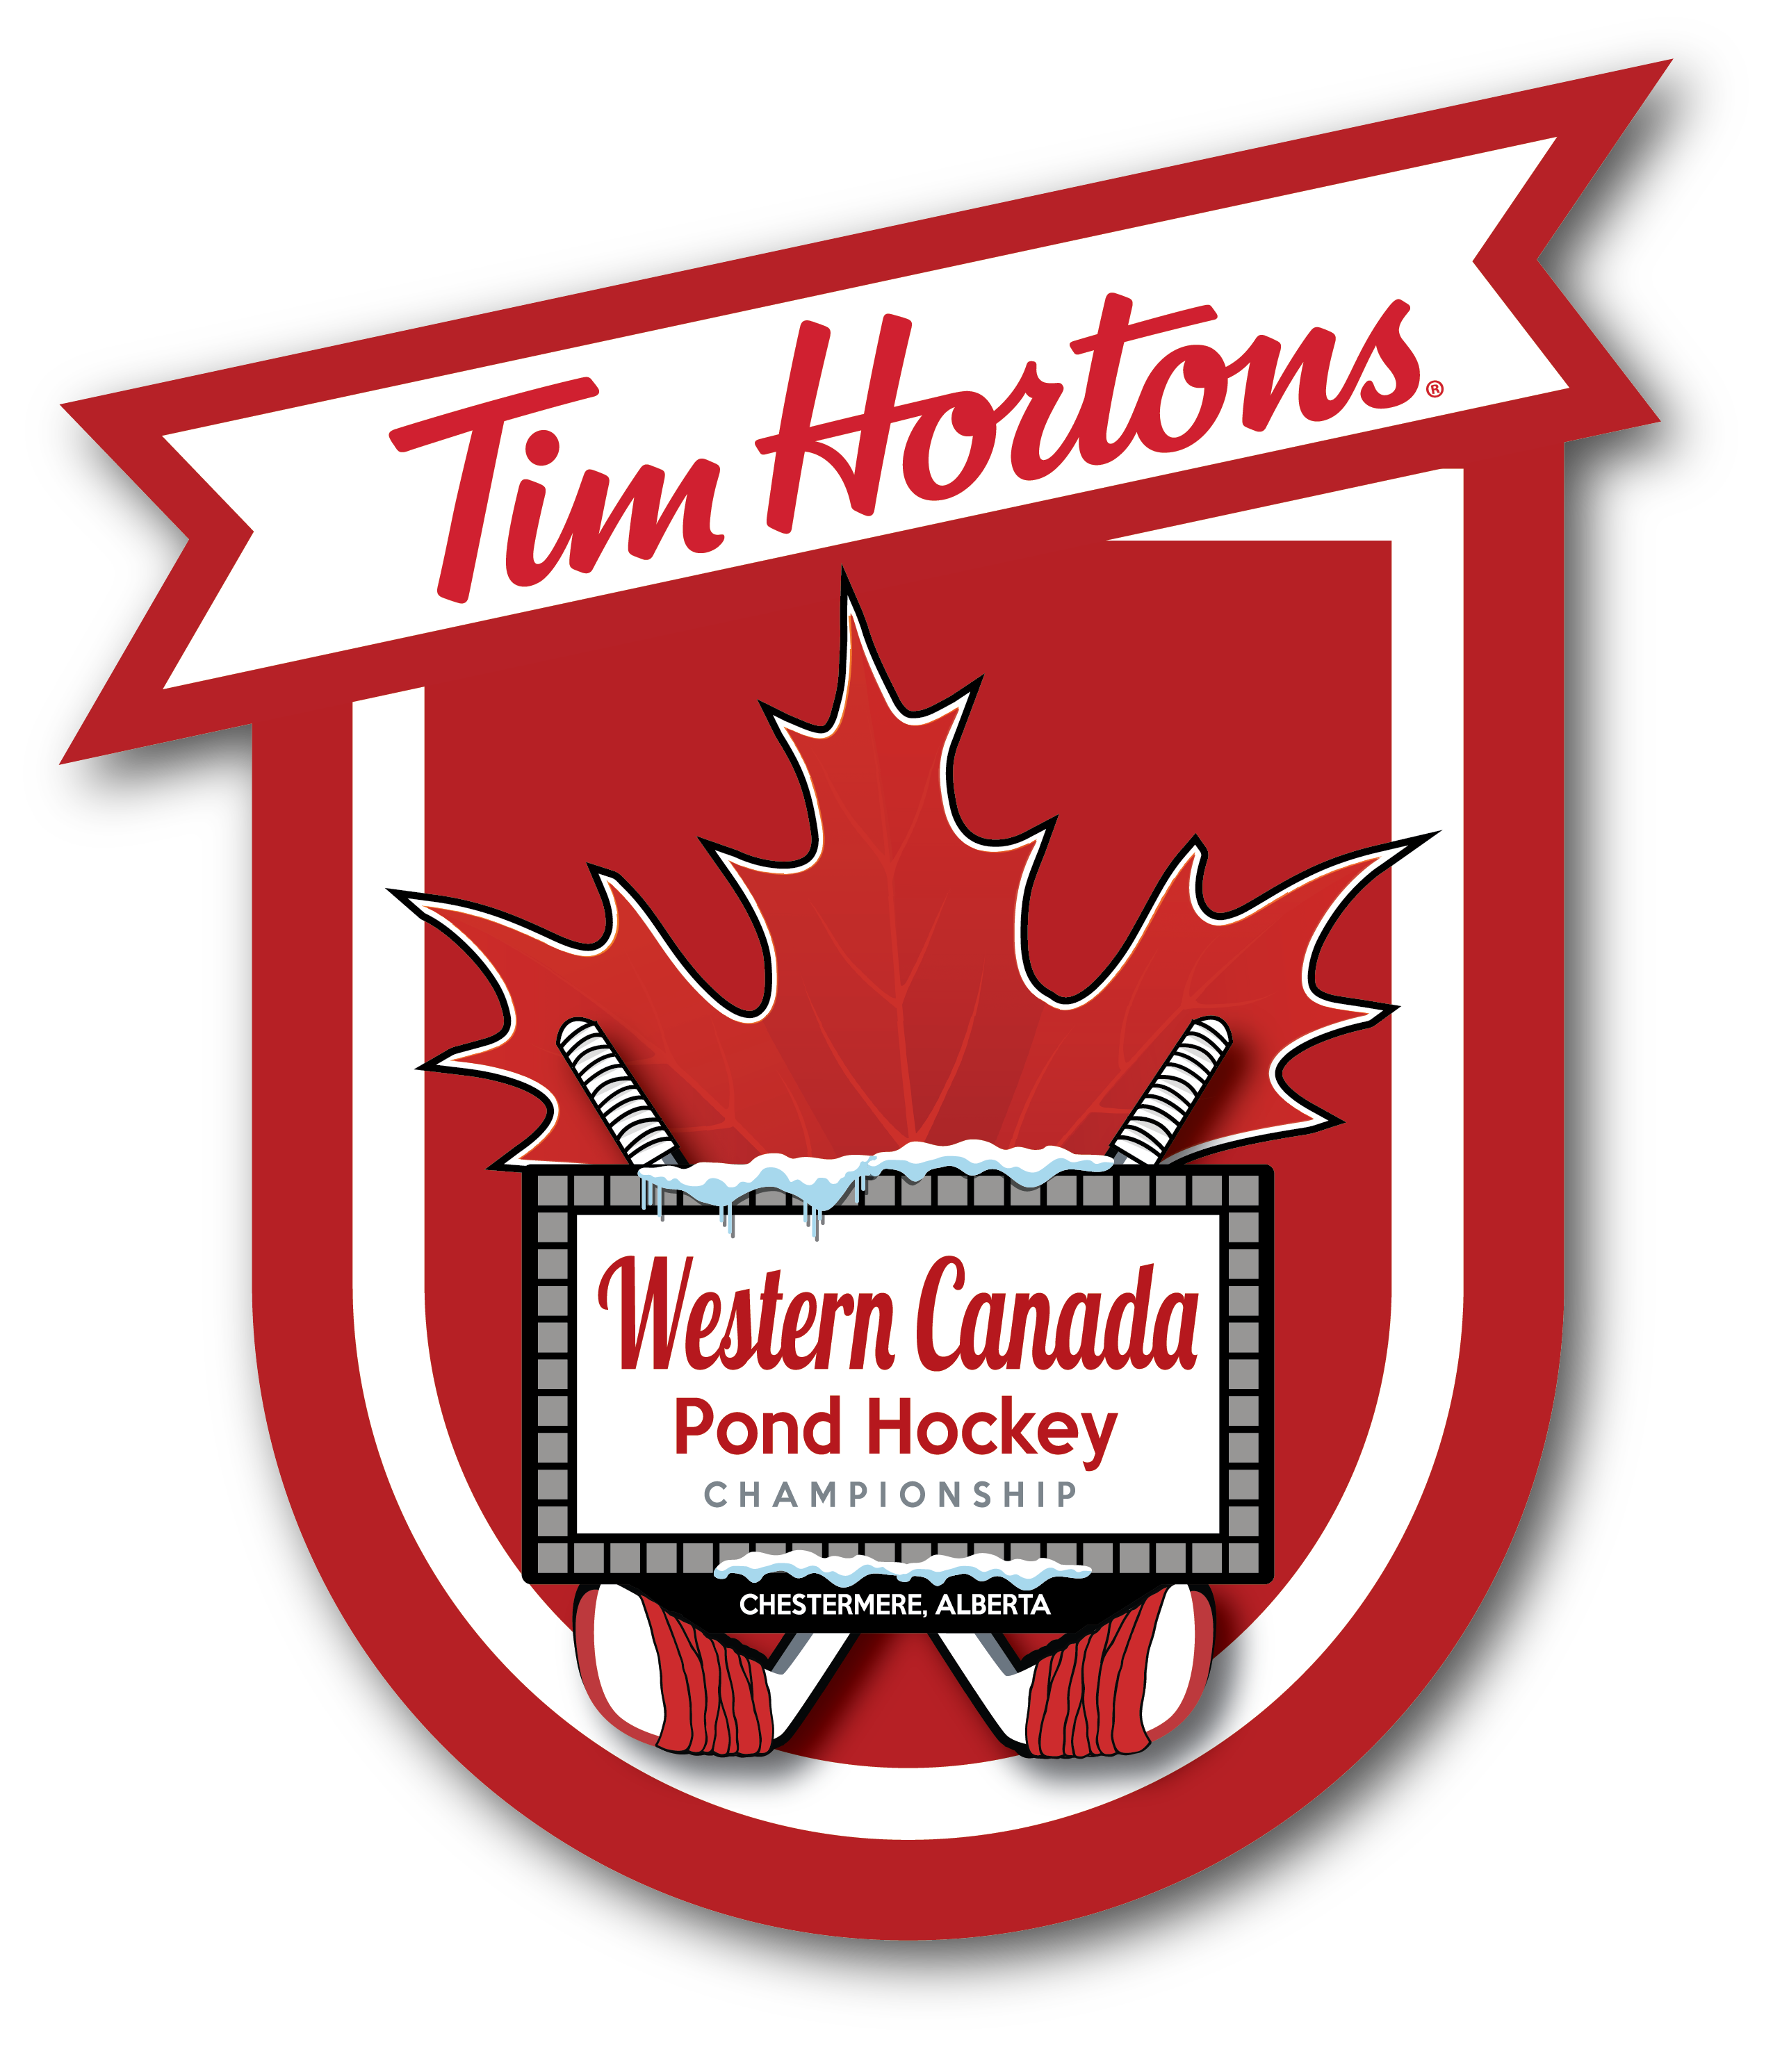 Western Canada Pond Hockey Championship